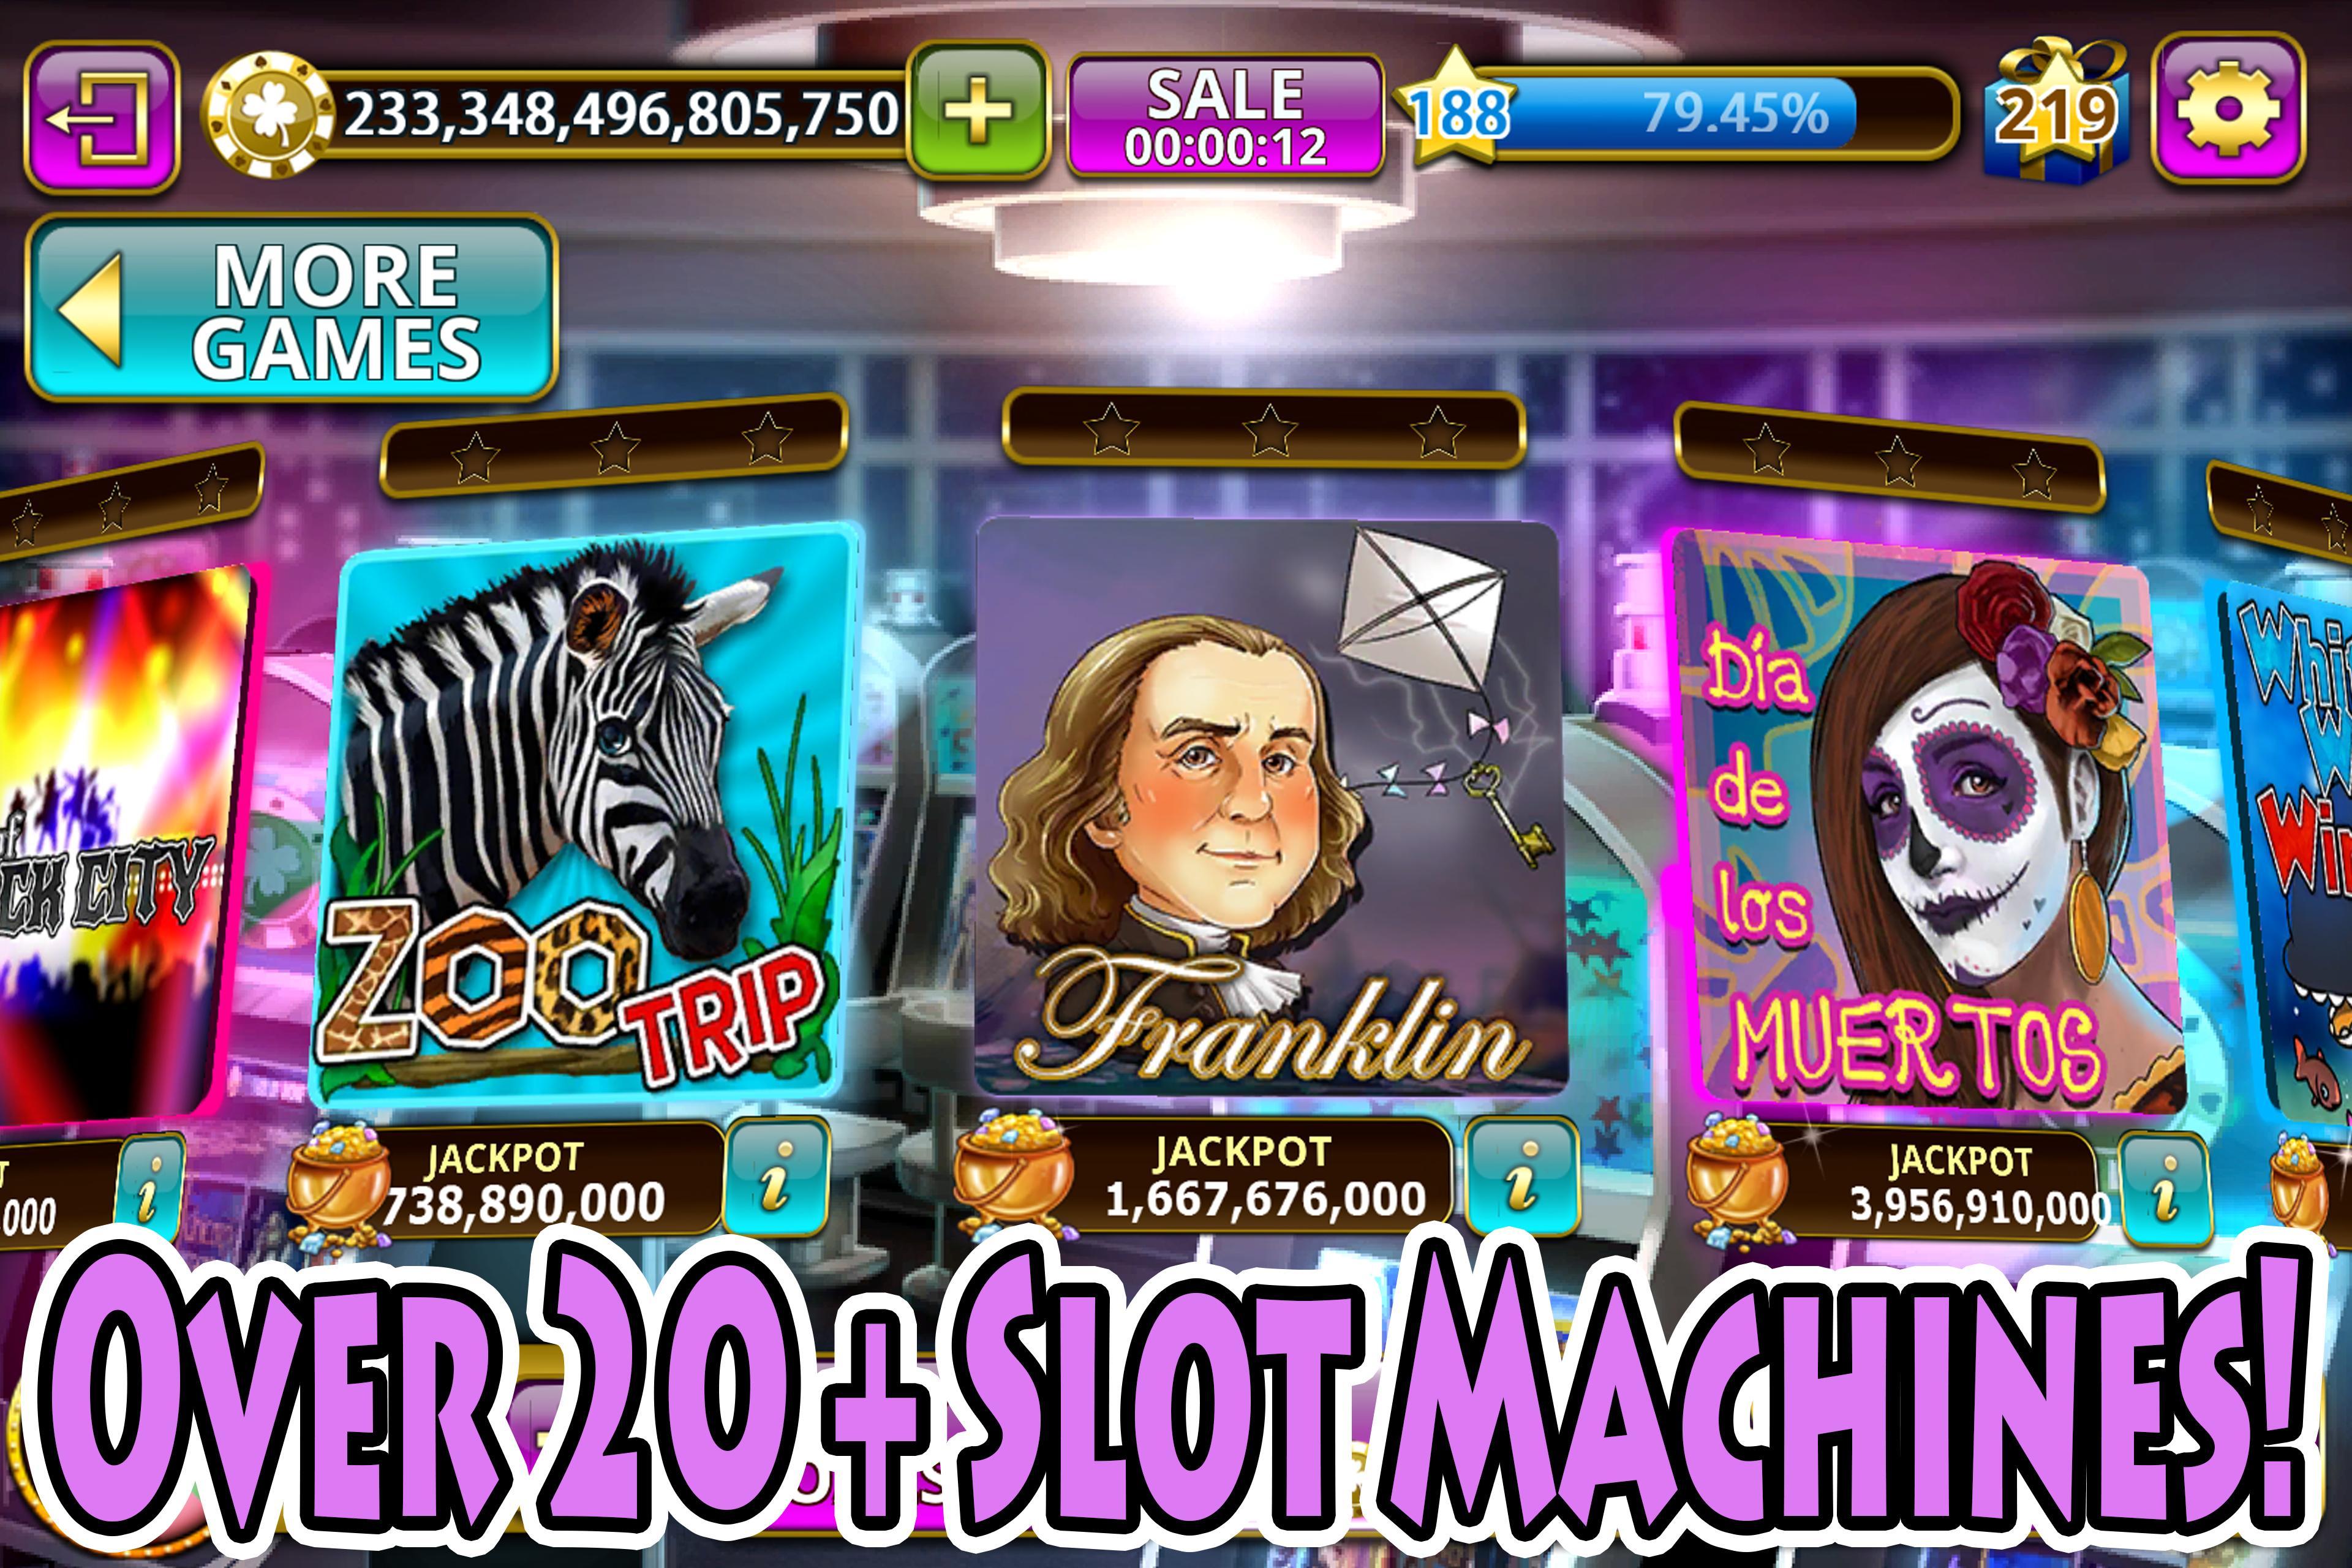 Loteria slots casino machines free games